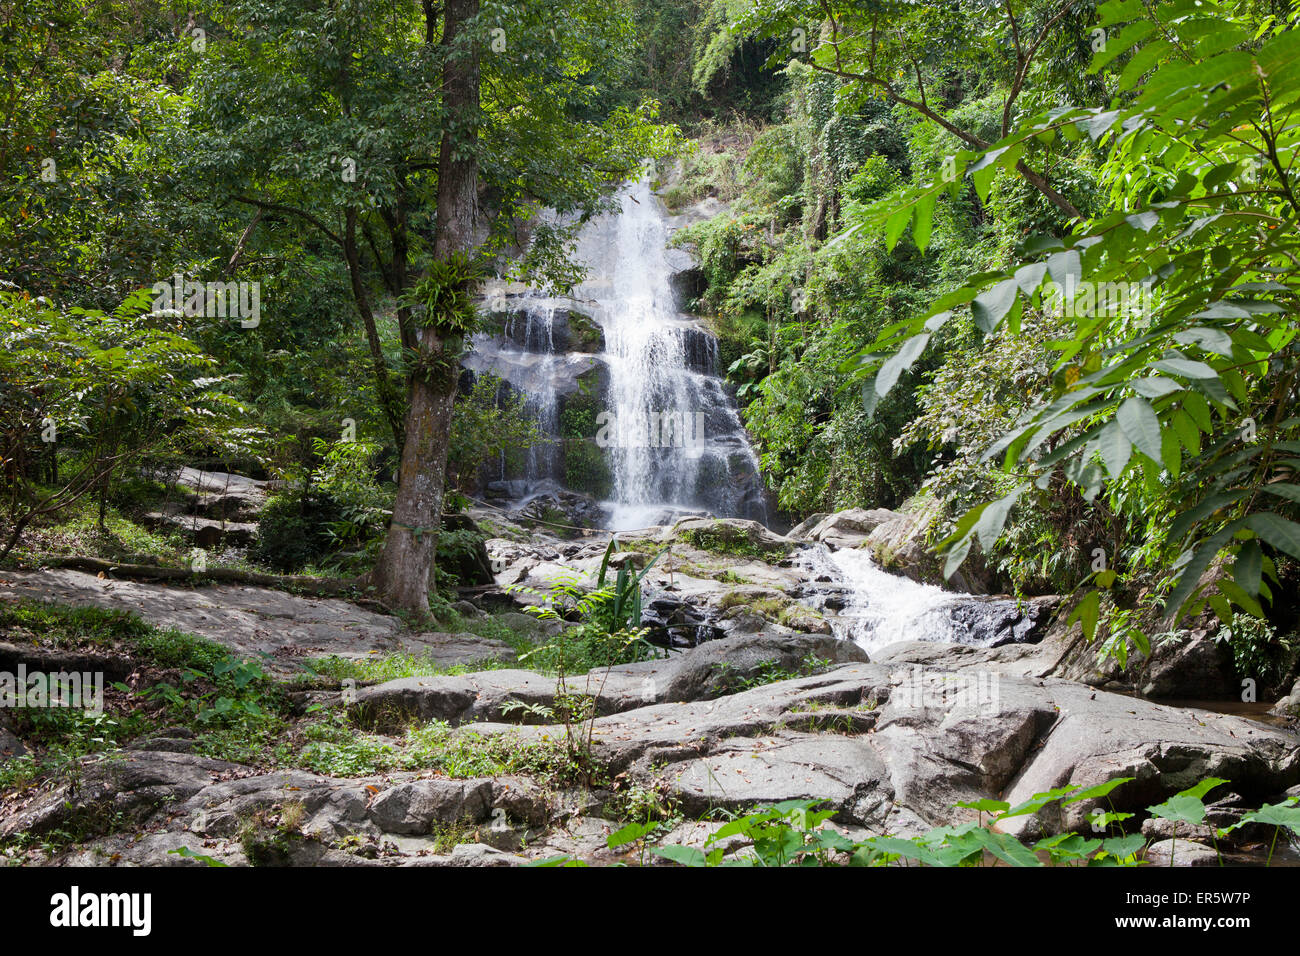 Waterfall in tropical forest, Bang Saphan, Prachuap Khiri Khan Province, Thailand, Asia Stock Photo